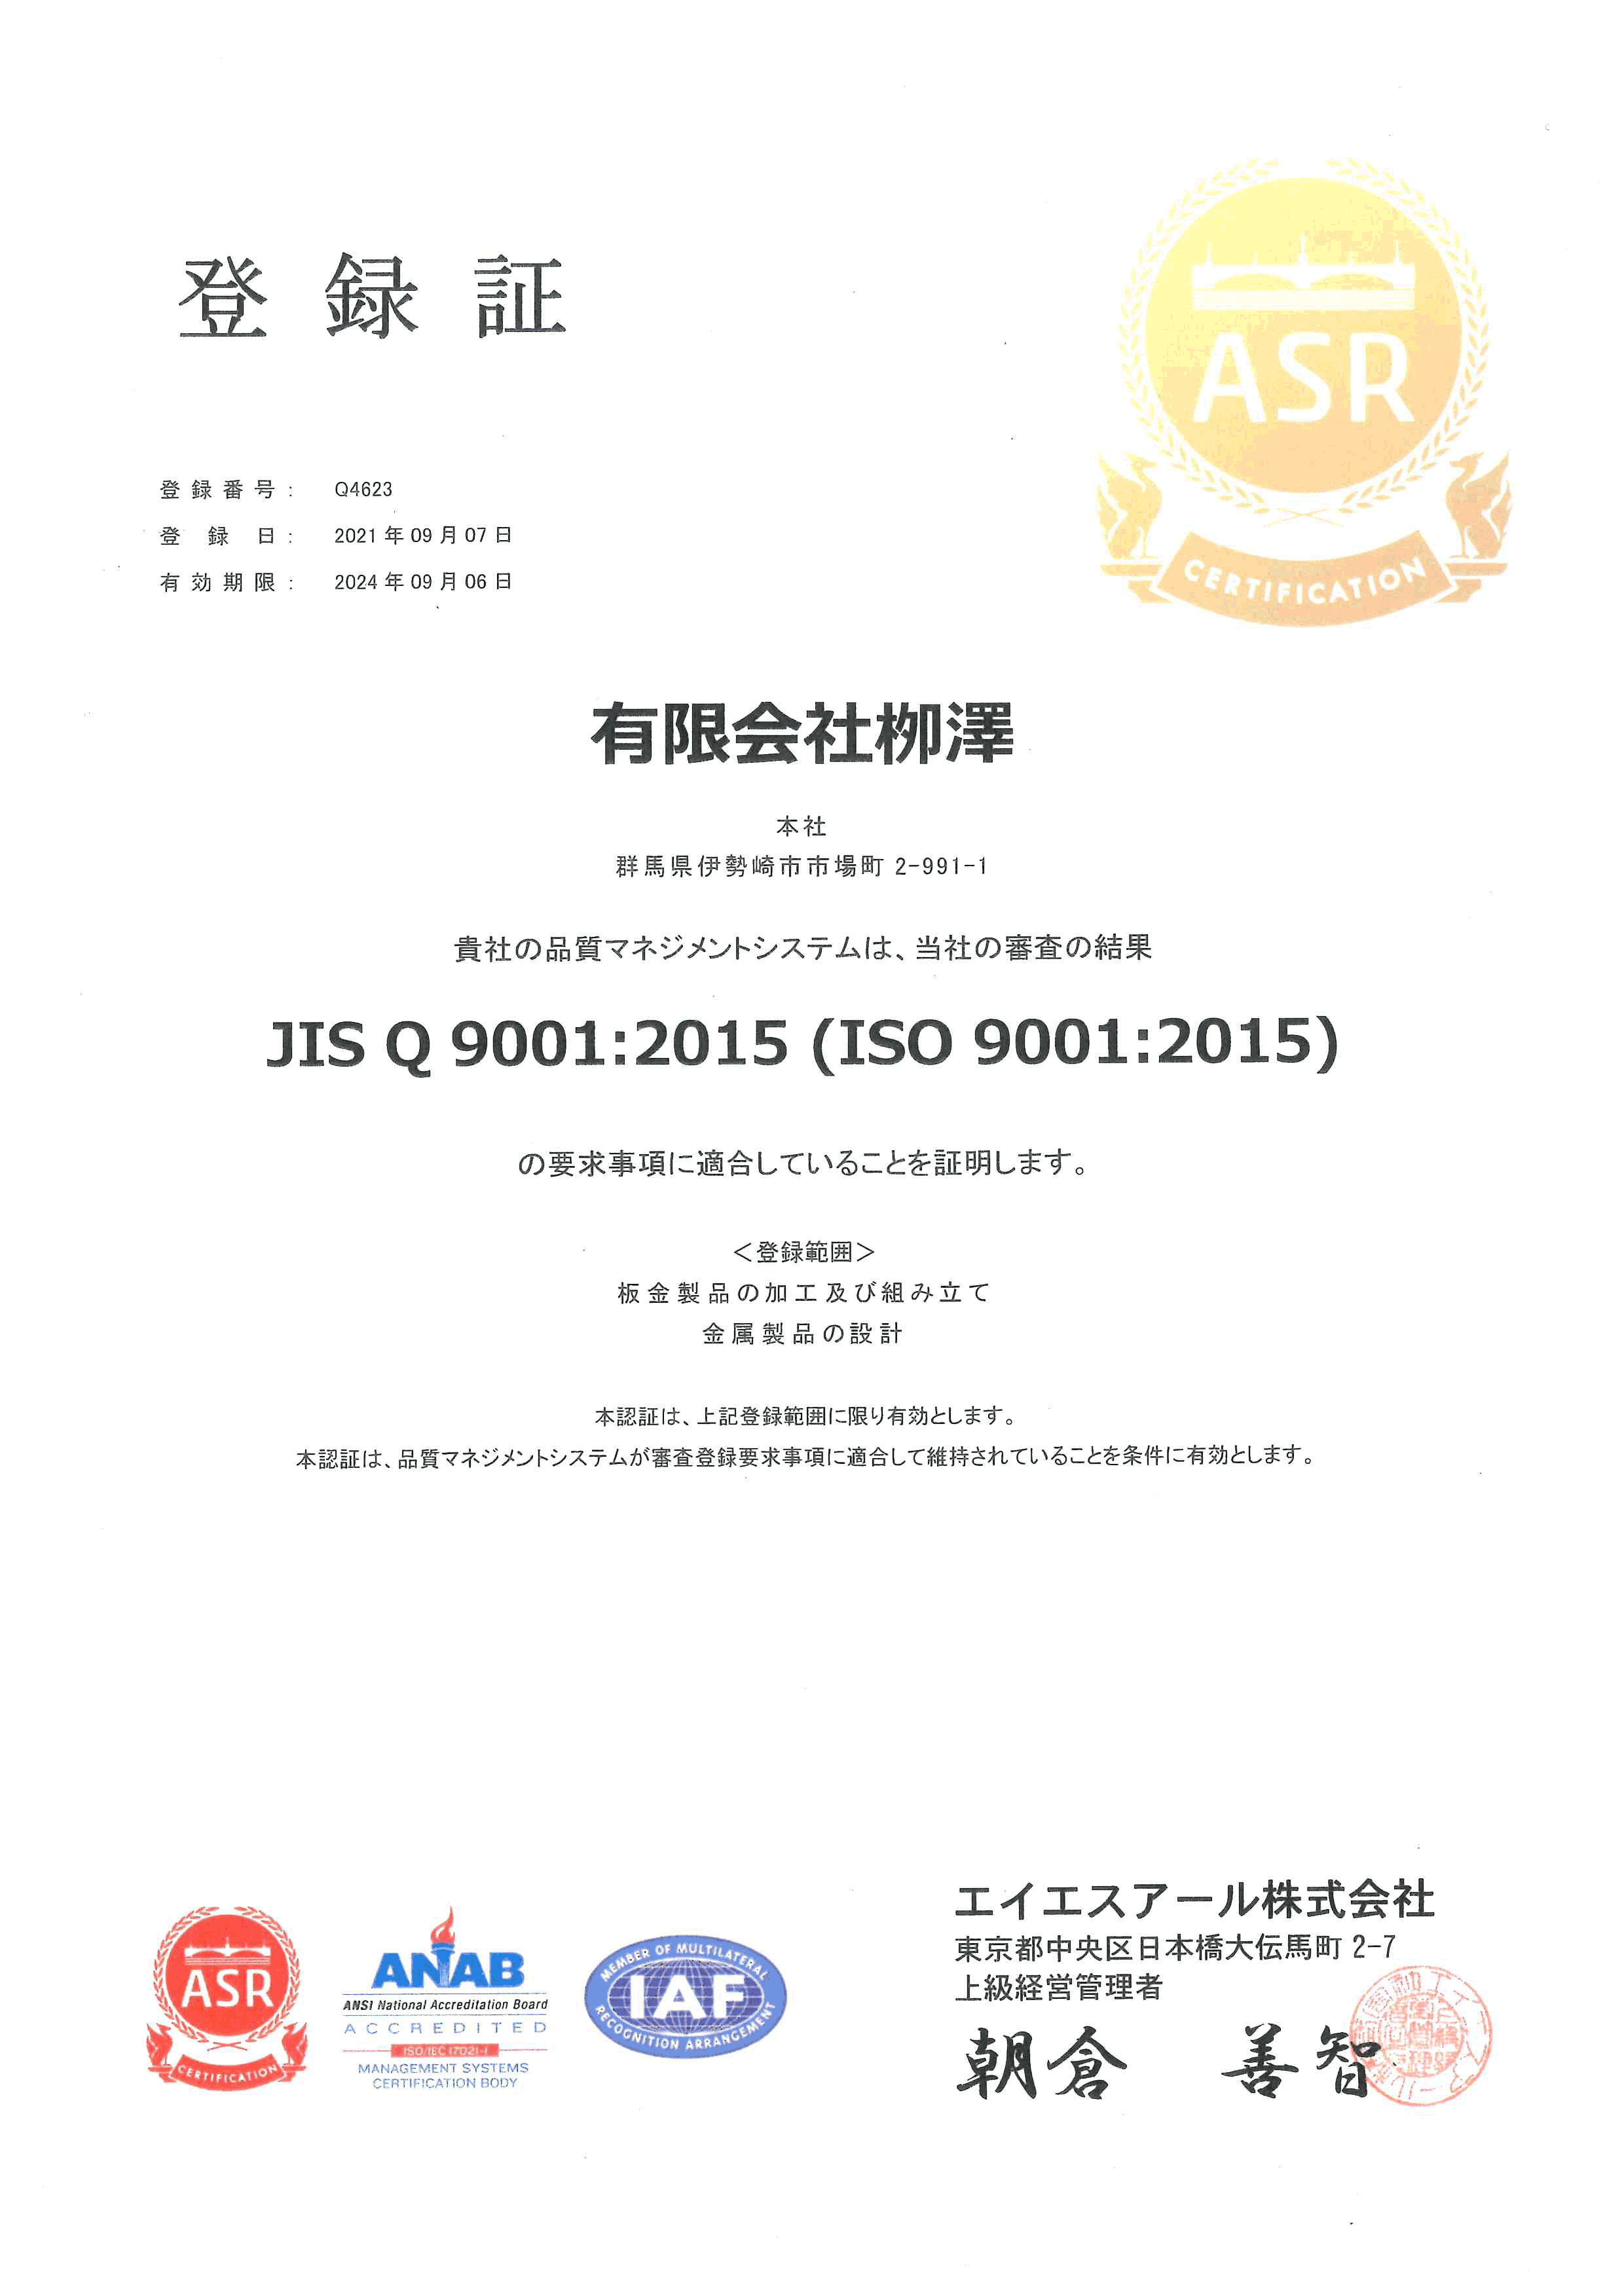 ISO9001:2015/JIS Q 9001:2015 を有限会社柳澤が取得した登録証